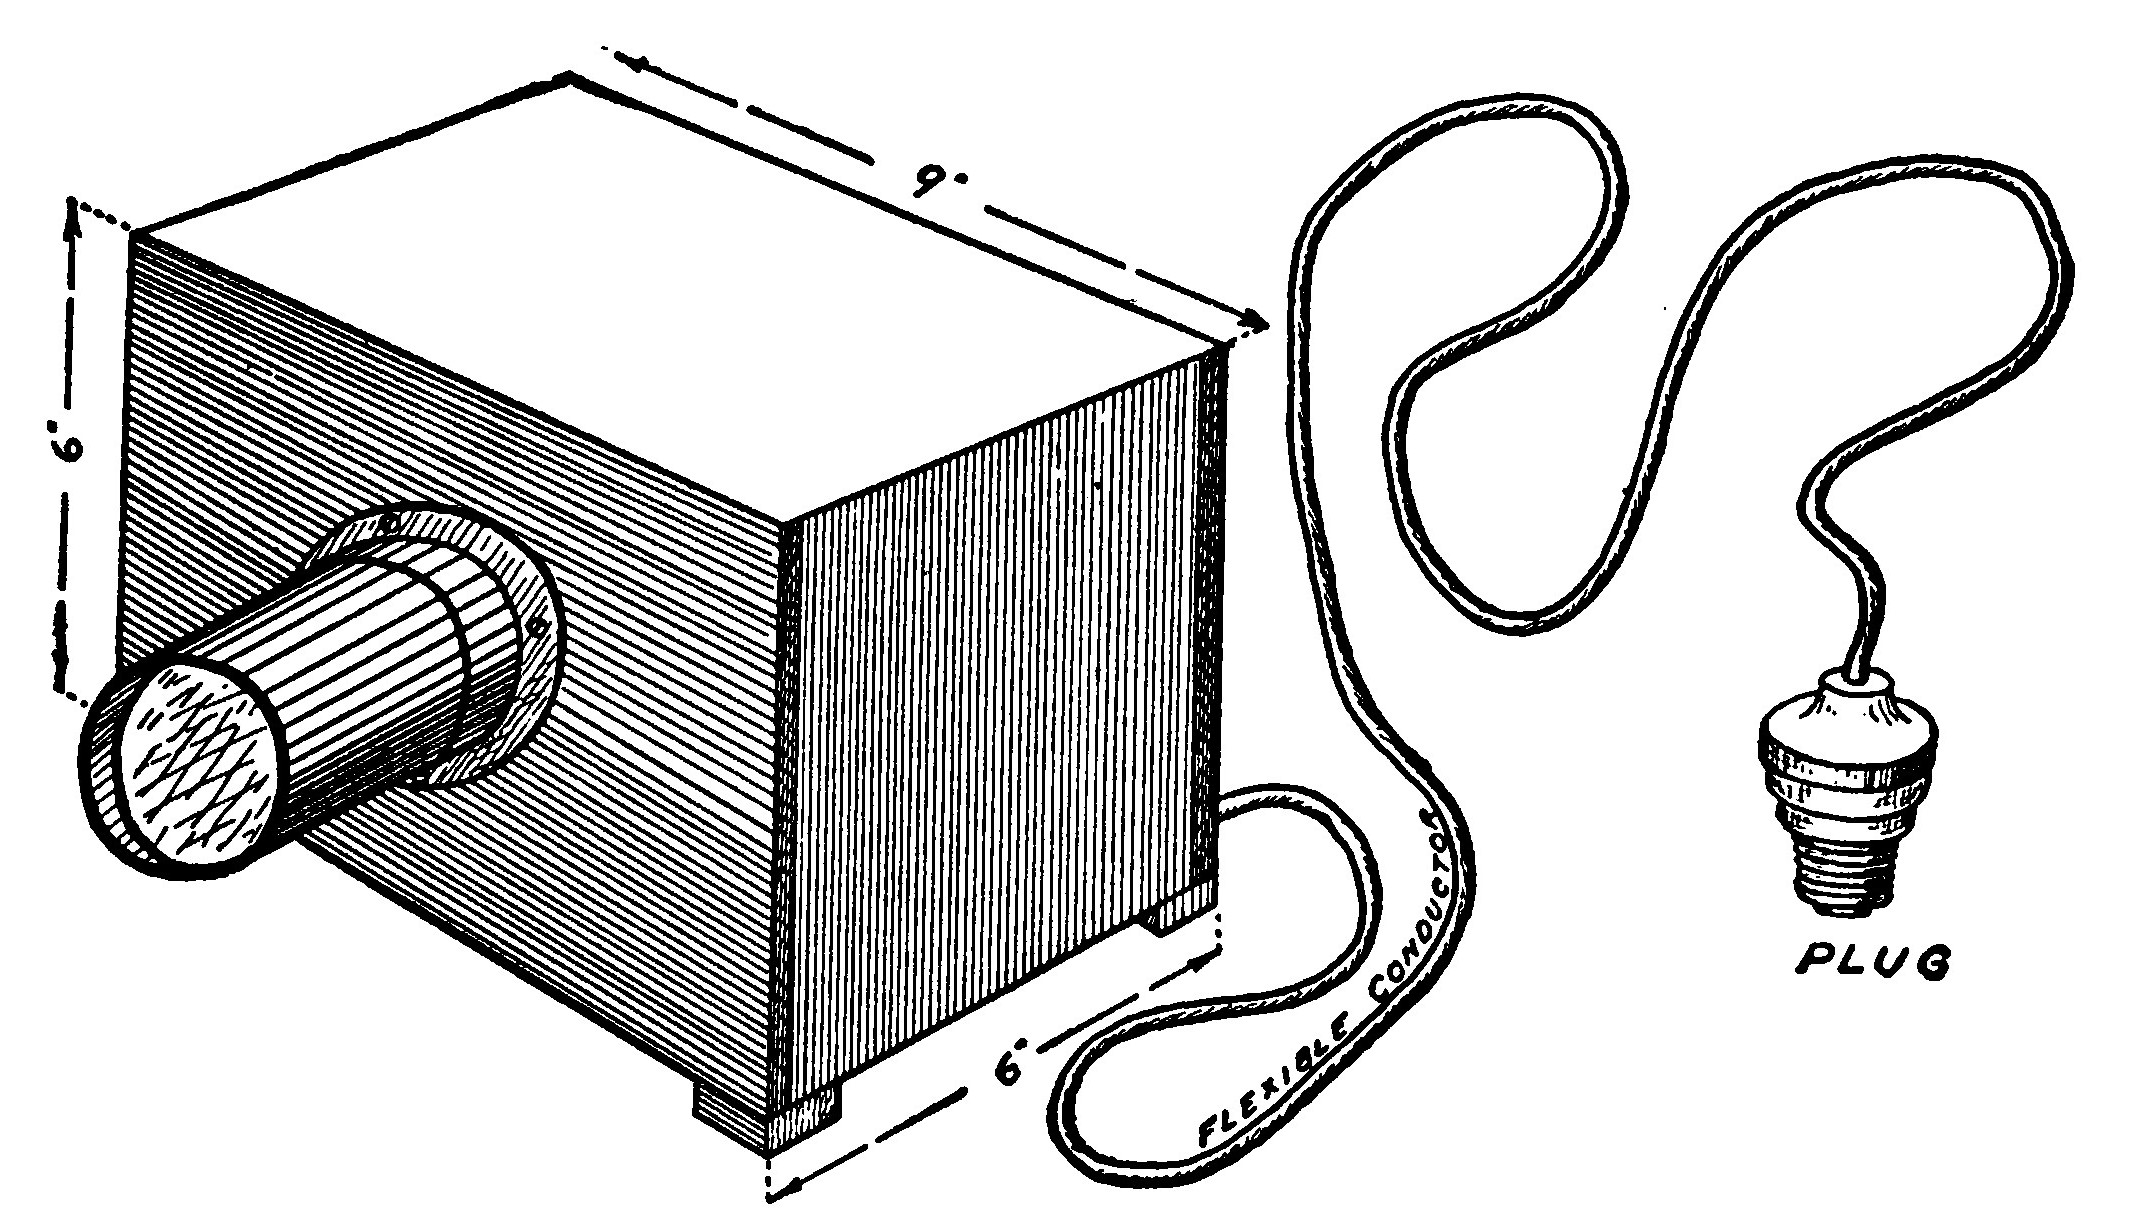 Fig. 306.—A Reflectoscope.